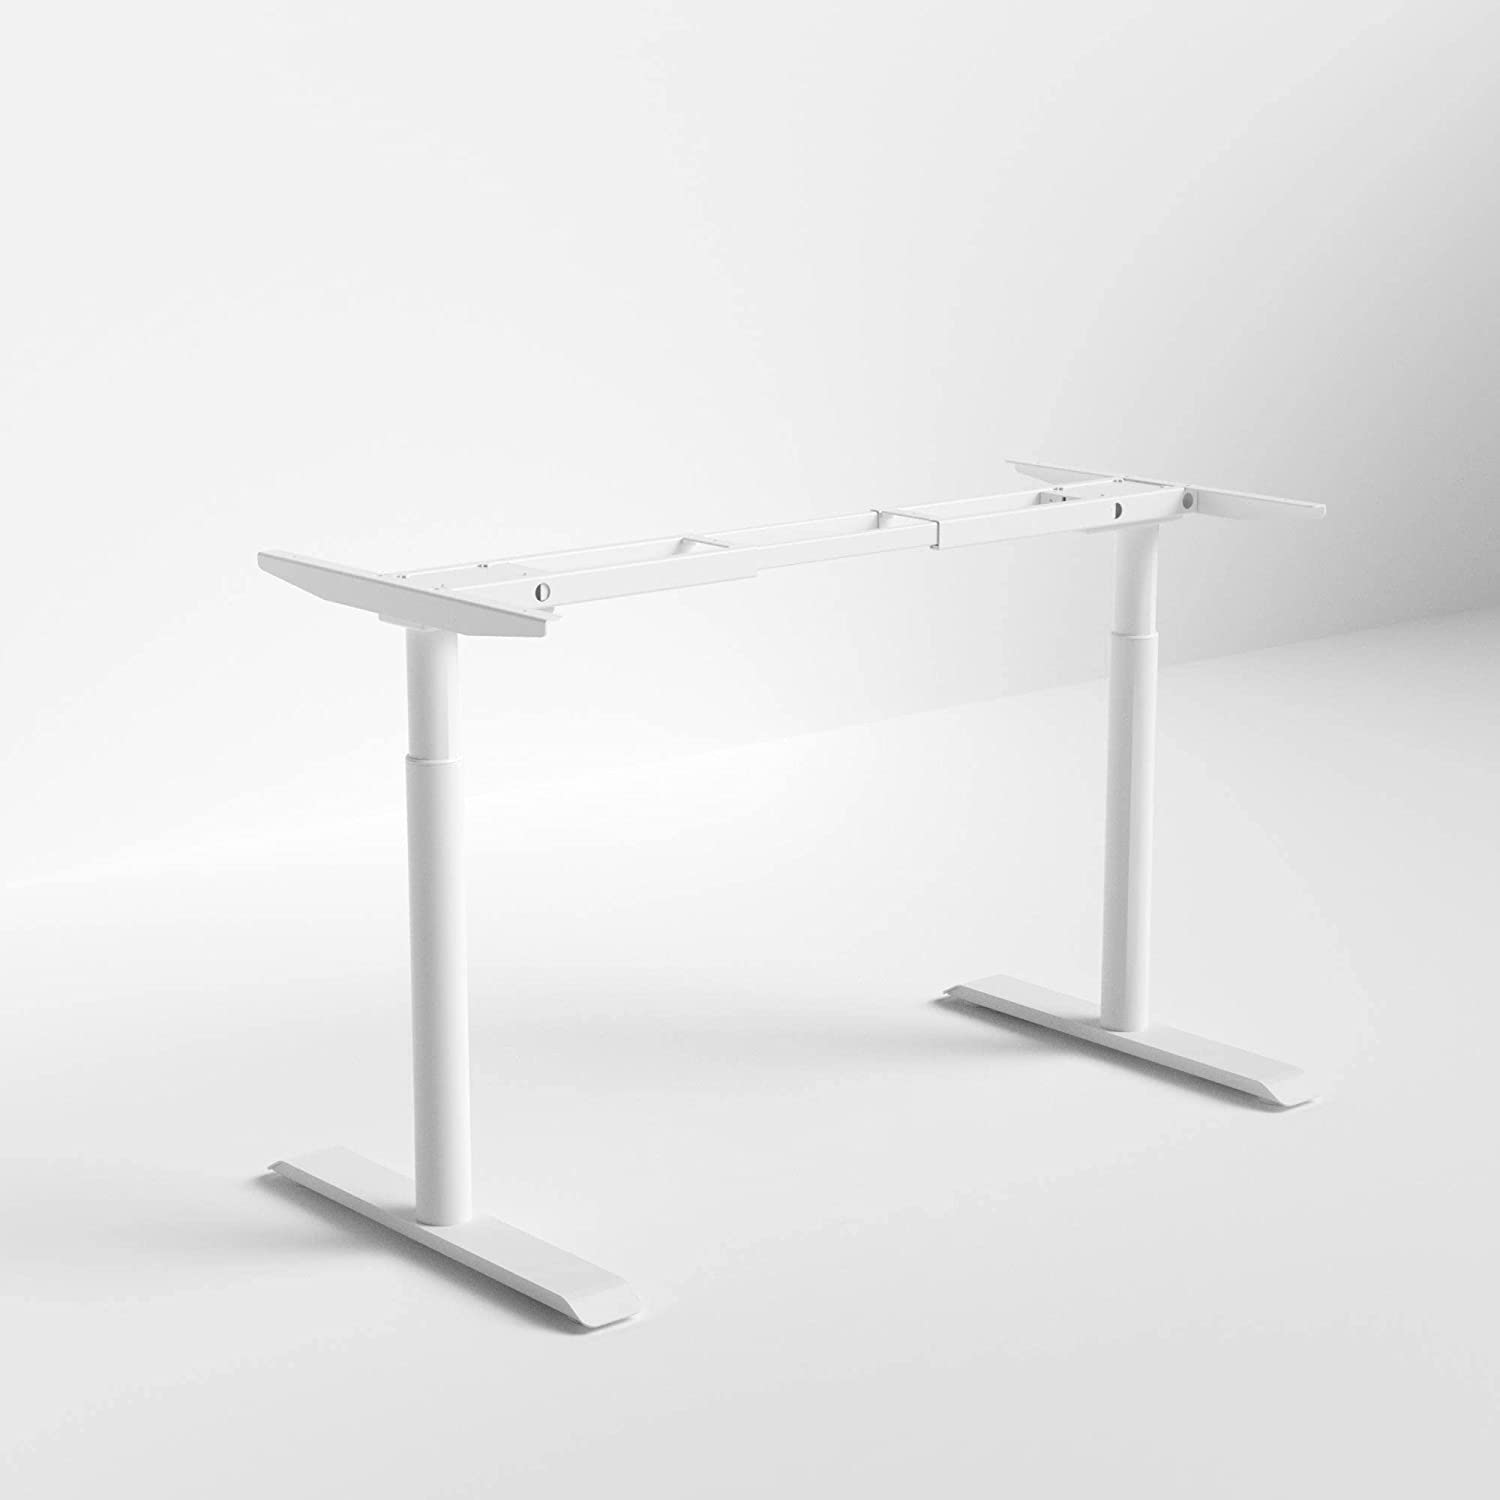 Basic Desk Frame By Navodesk, Manual Height Adjustable Desk Frame, Underframe for table top (Pin type) (white2)